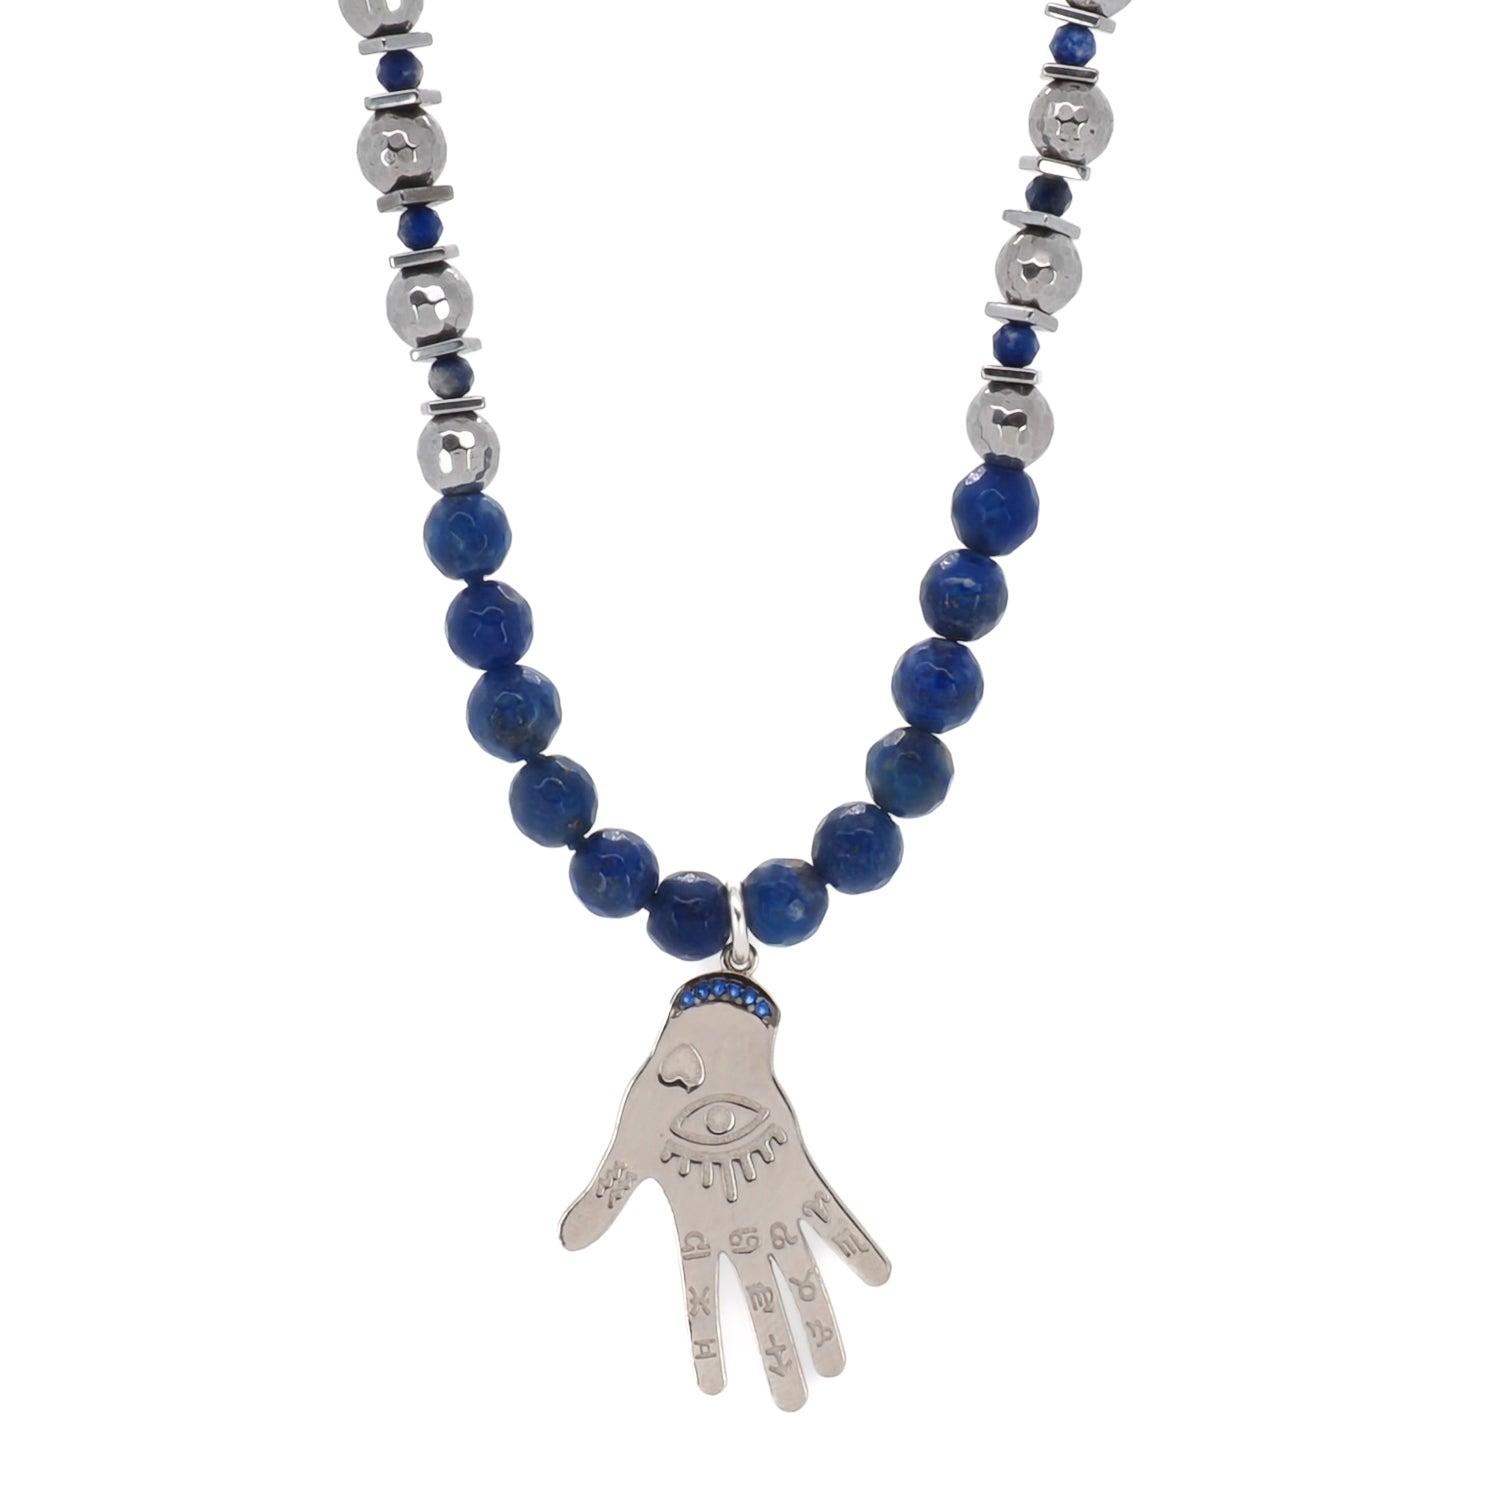 Spiritual Hamsa Lapis Lazuli Necklace - A powerful symbol of protection and positivity.